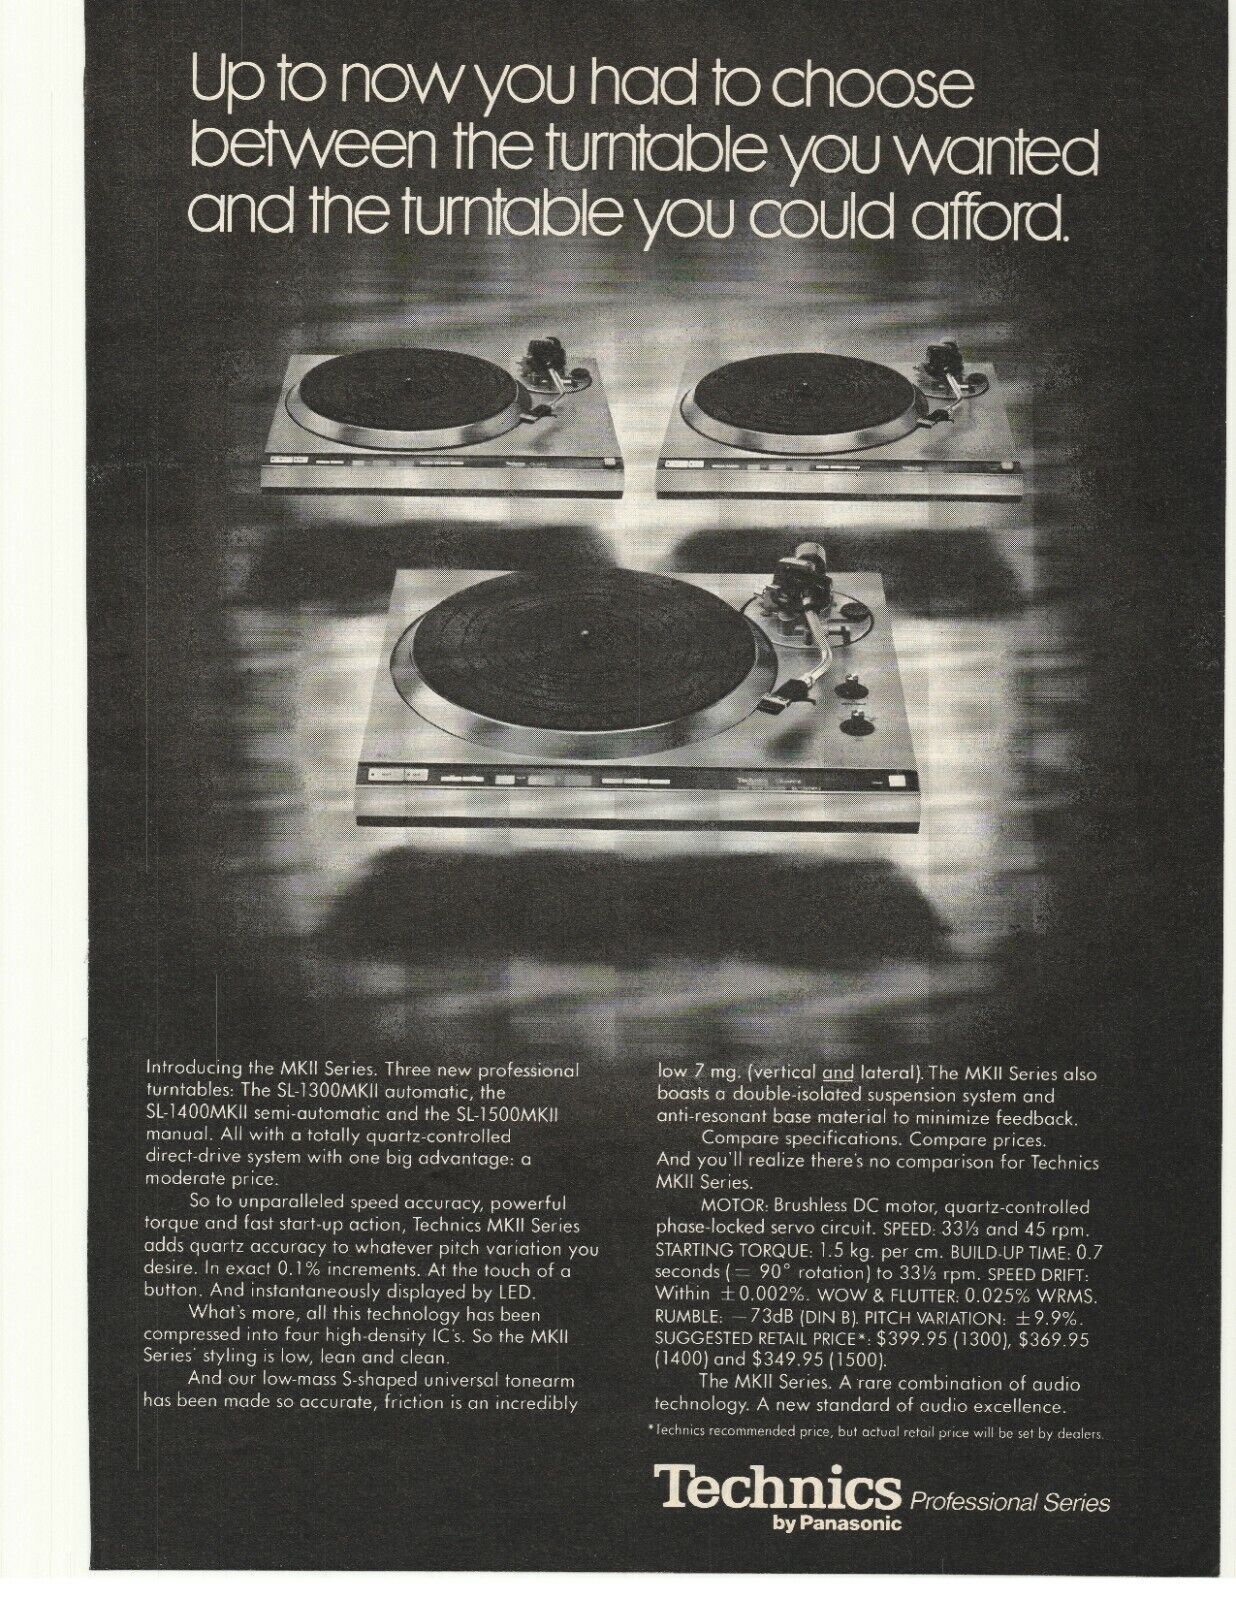 1977 Technics Professional Series Turntables Advertisement